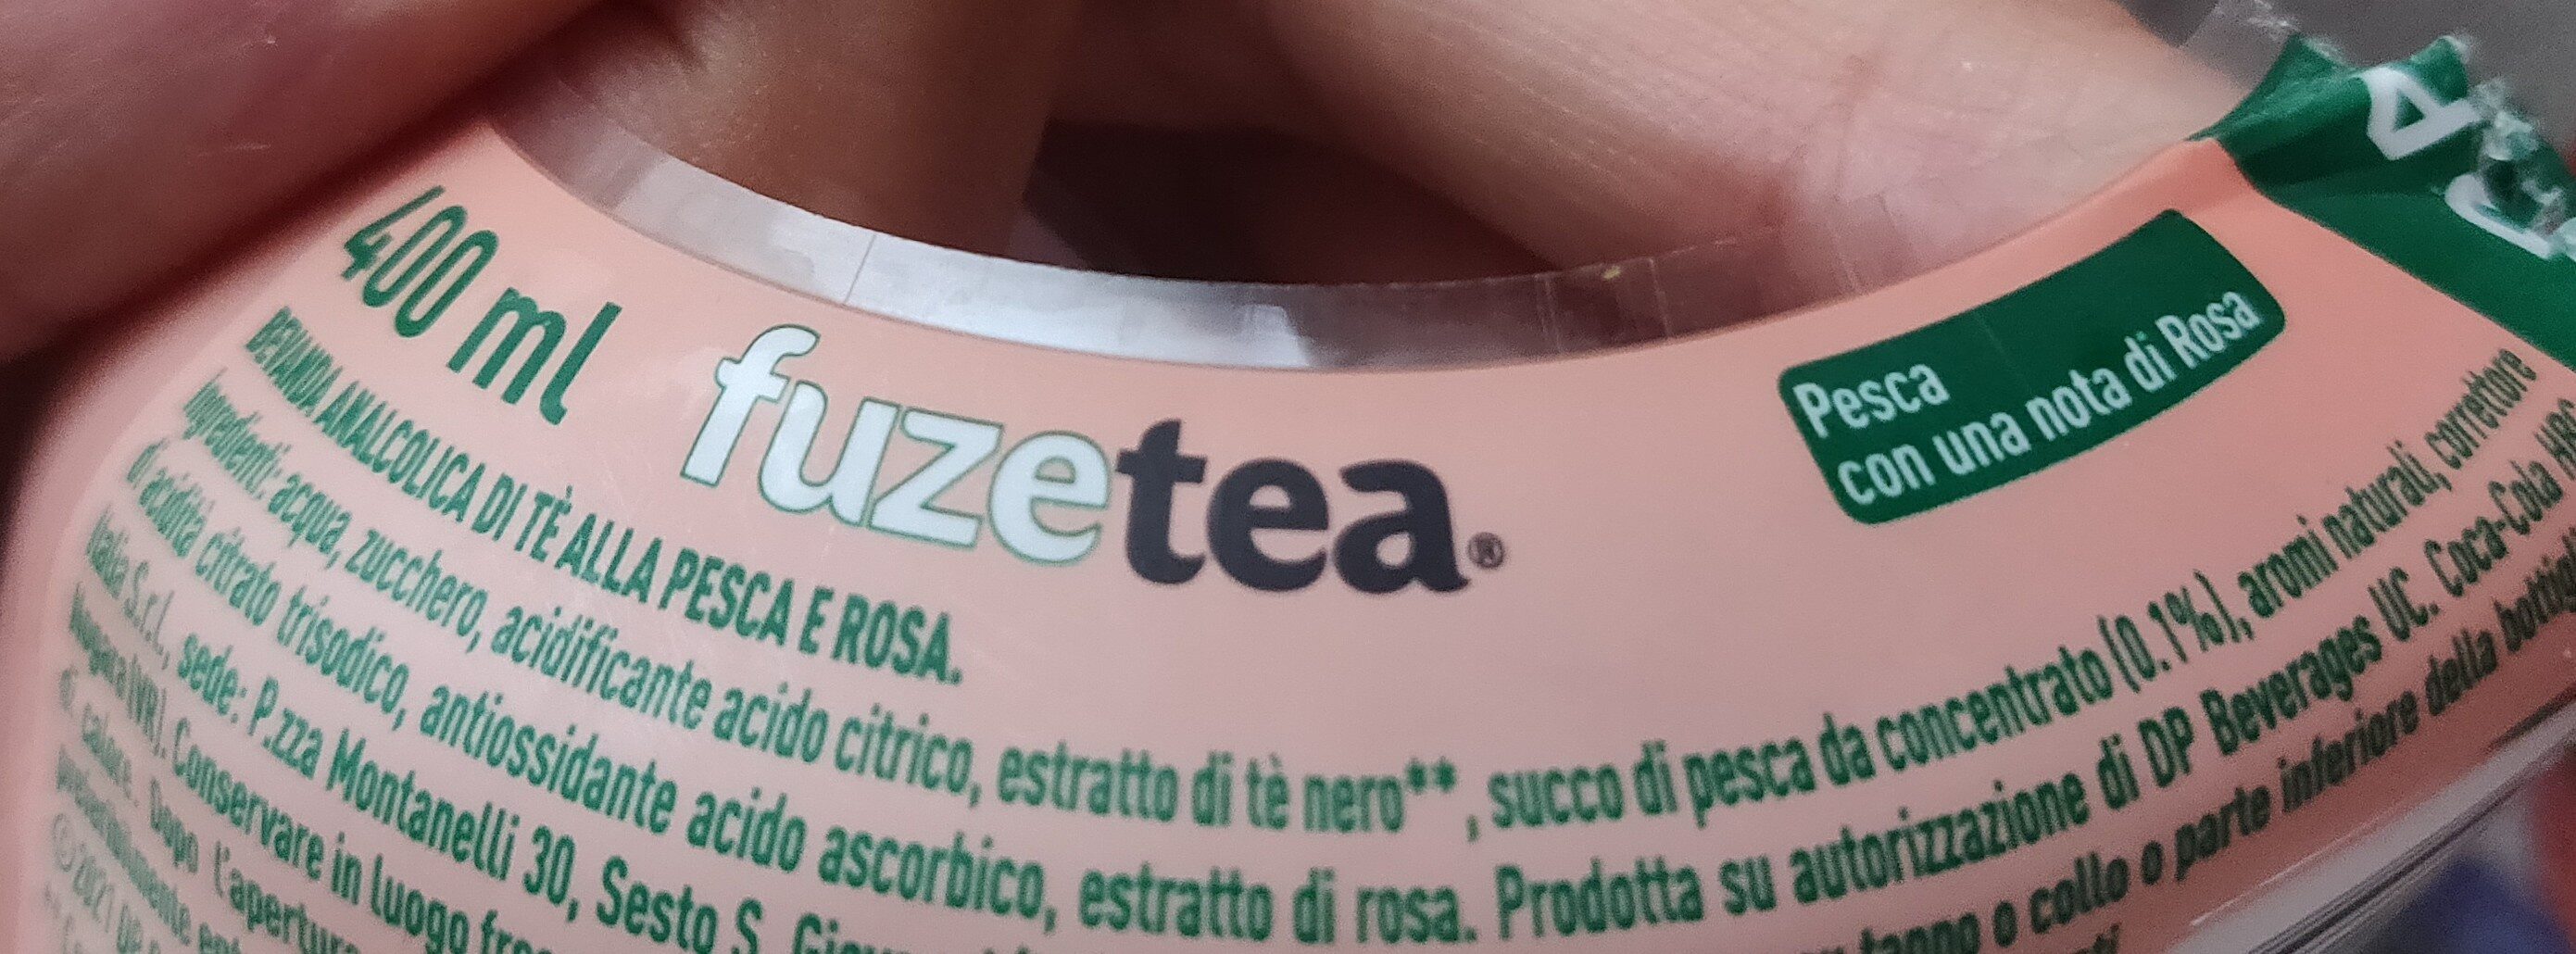 Fuzetea Pesca - Ingredients - it